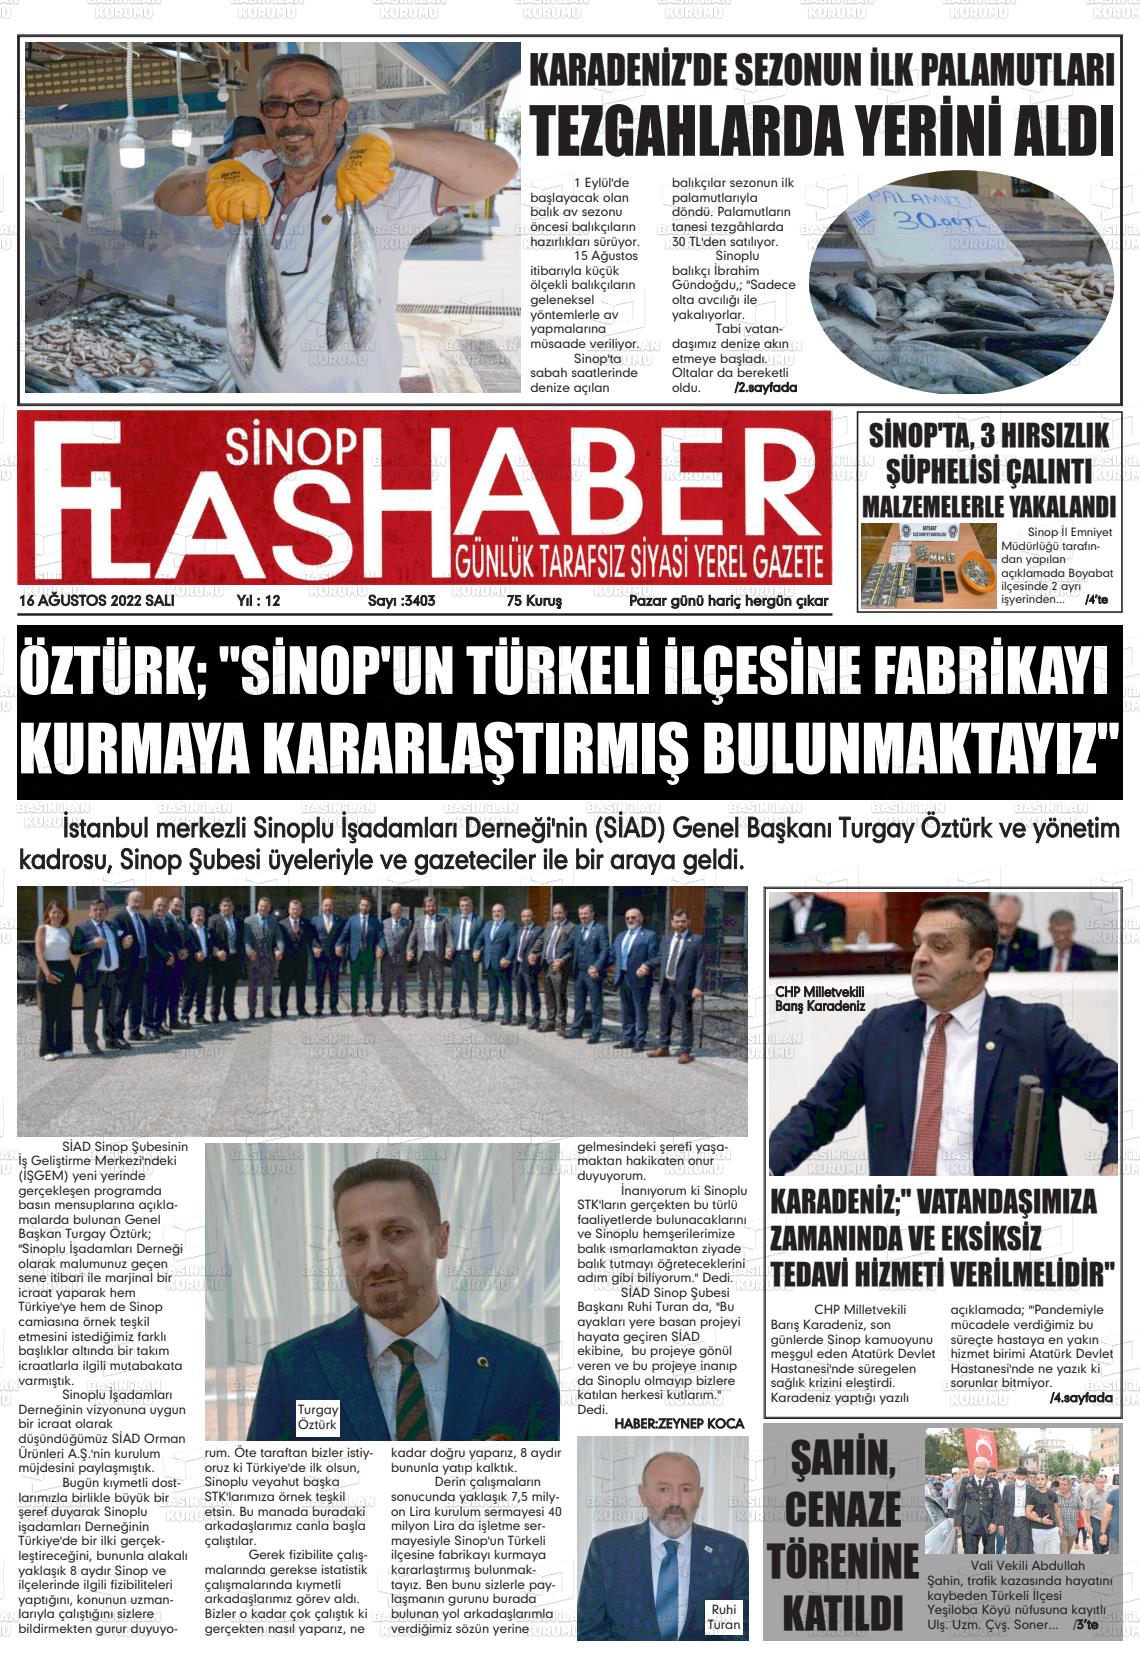 16 Ağustos 2022 Sinop Flaş Haber Gazete Manşeti